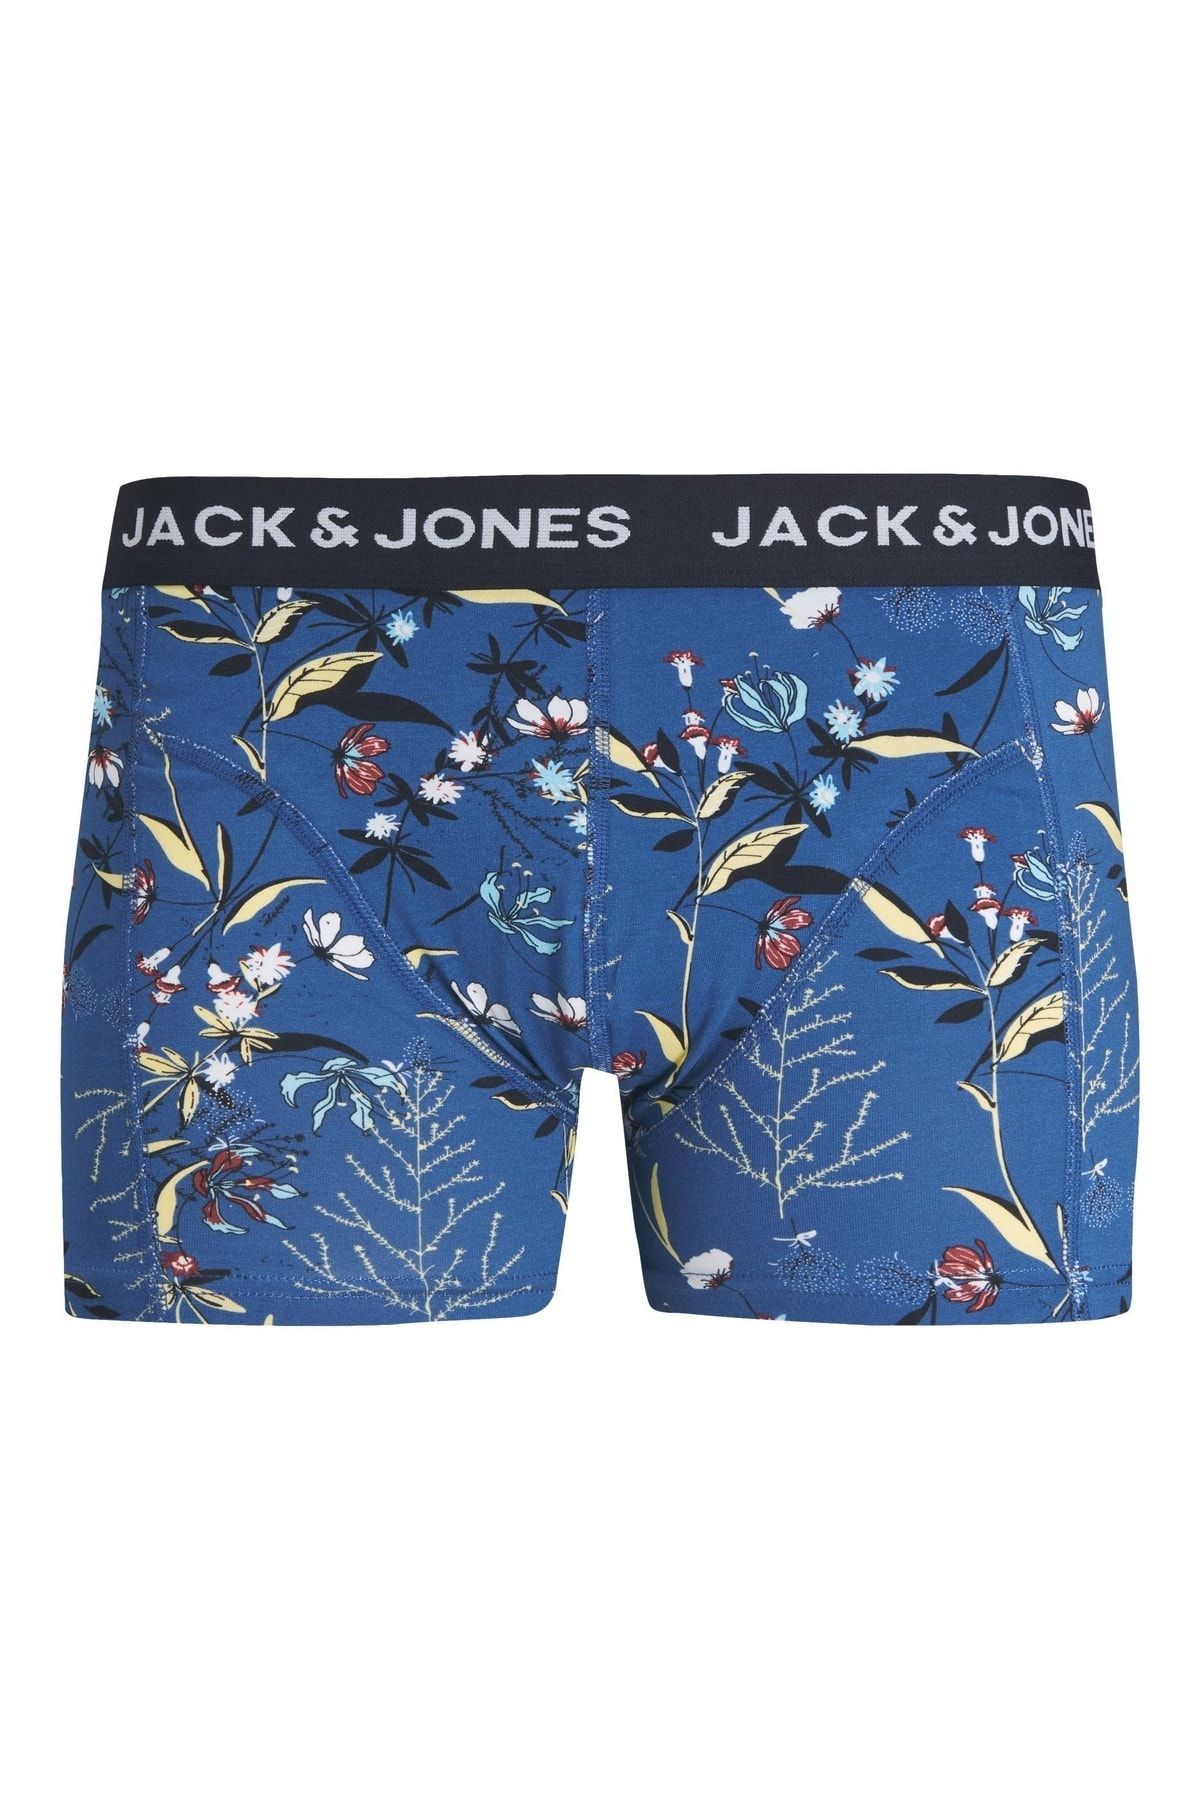 Jack & Jones Jack Jones Small Flowers Trunk Erkek Mavi Boxer 12237352-07